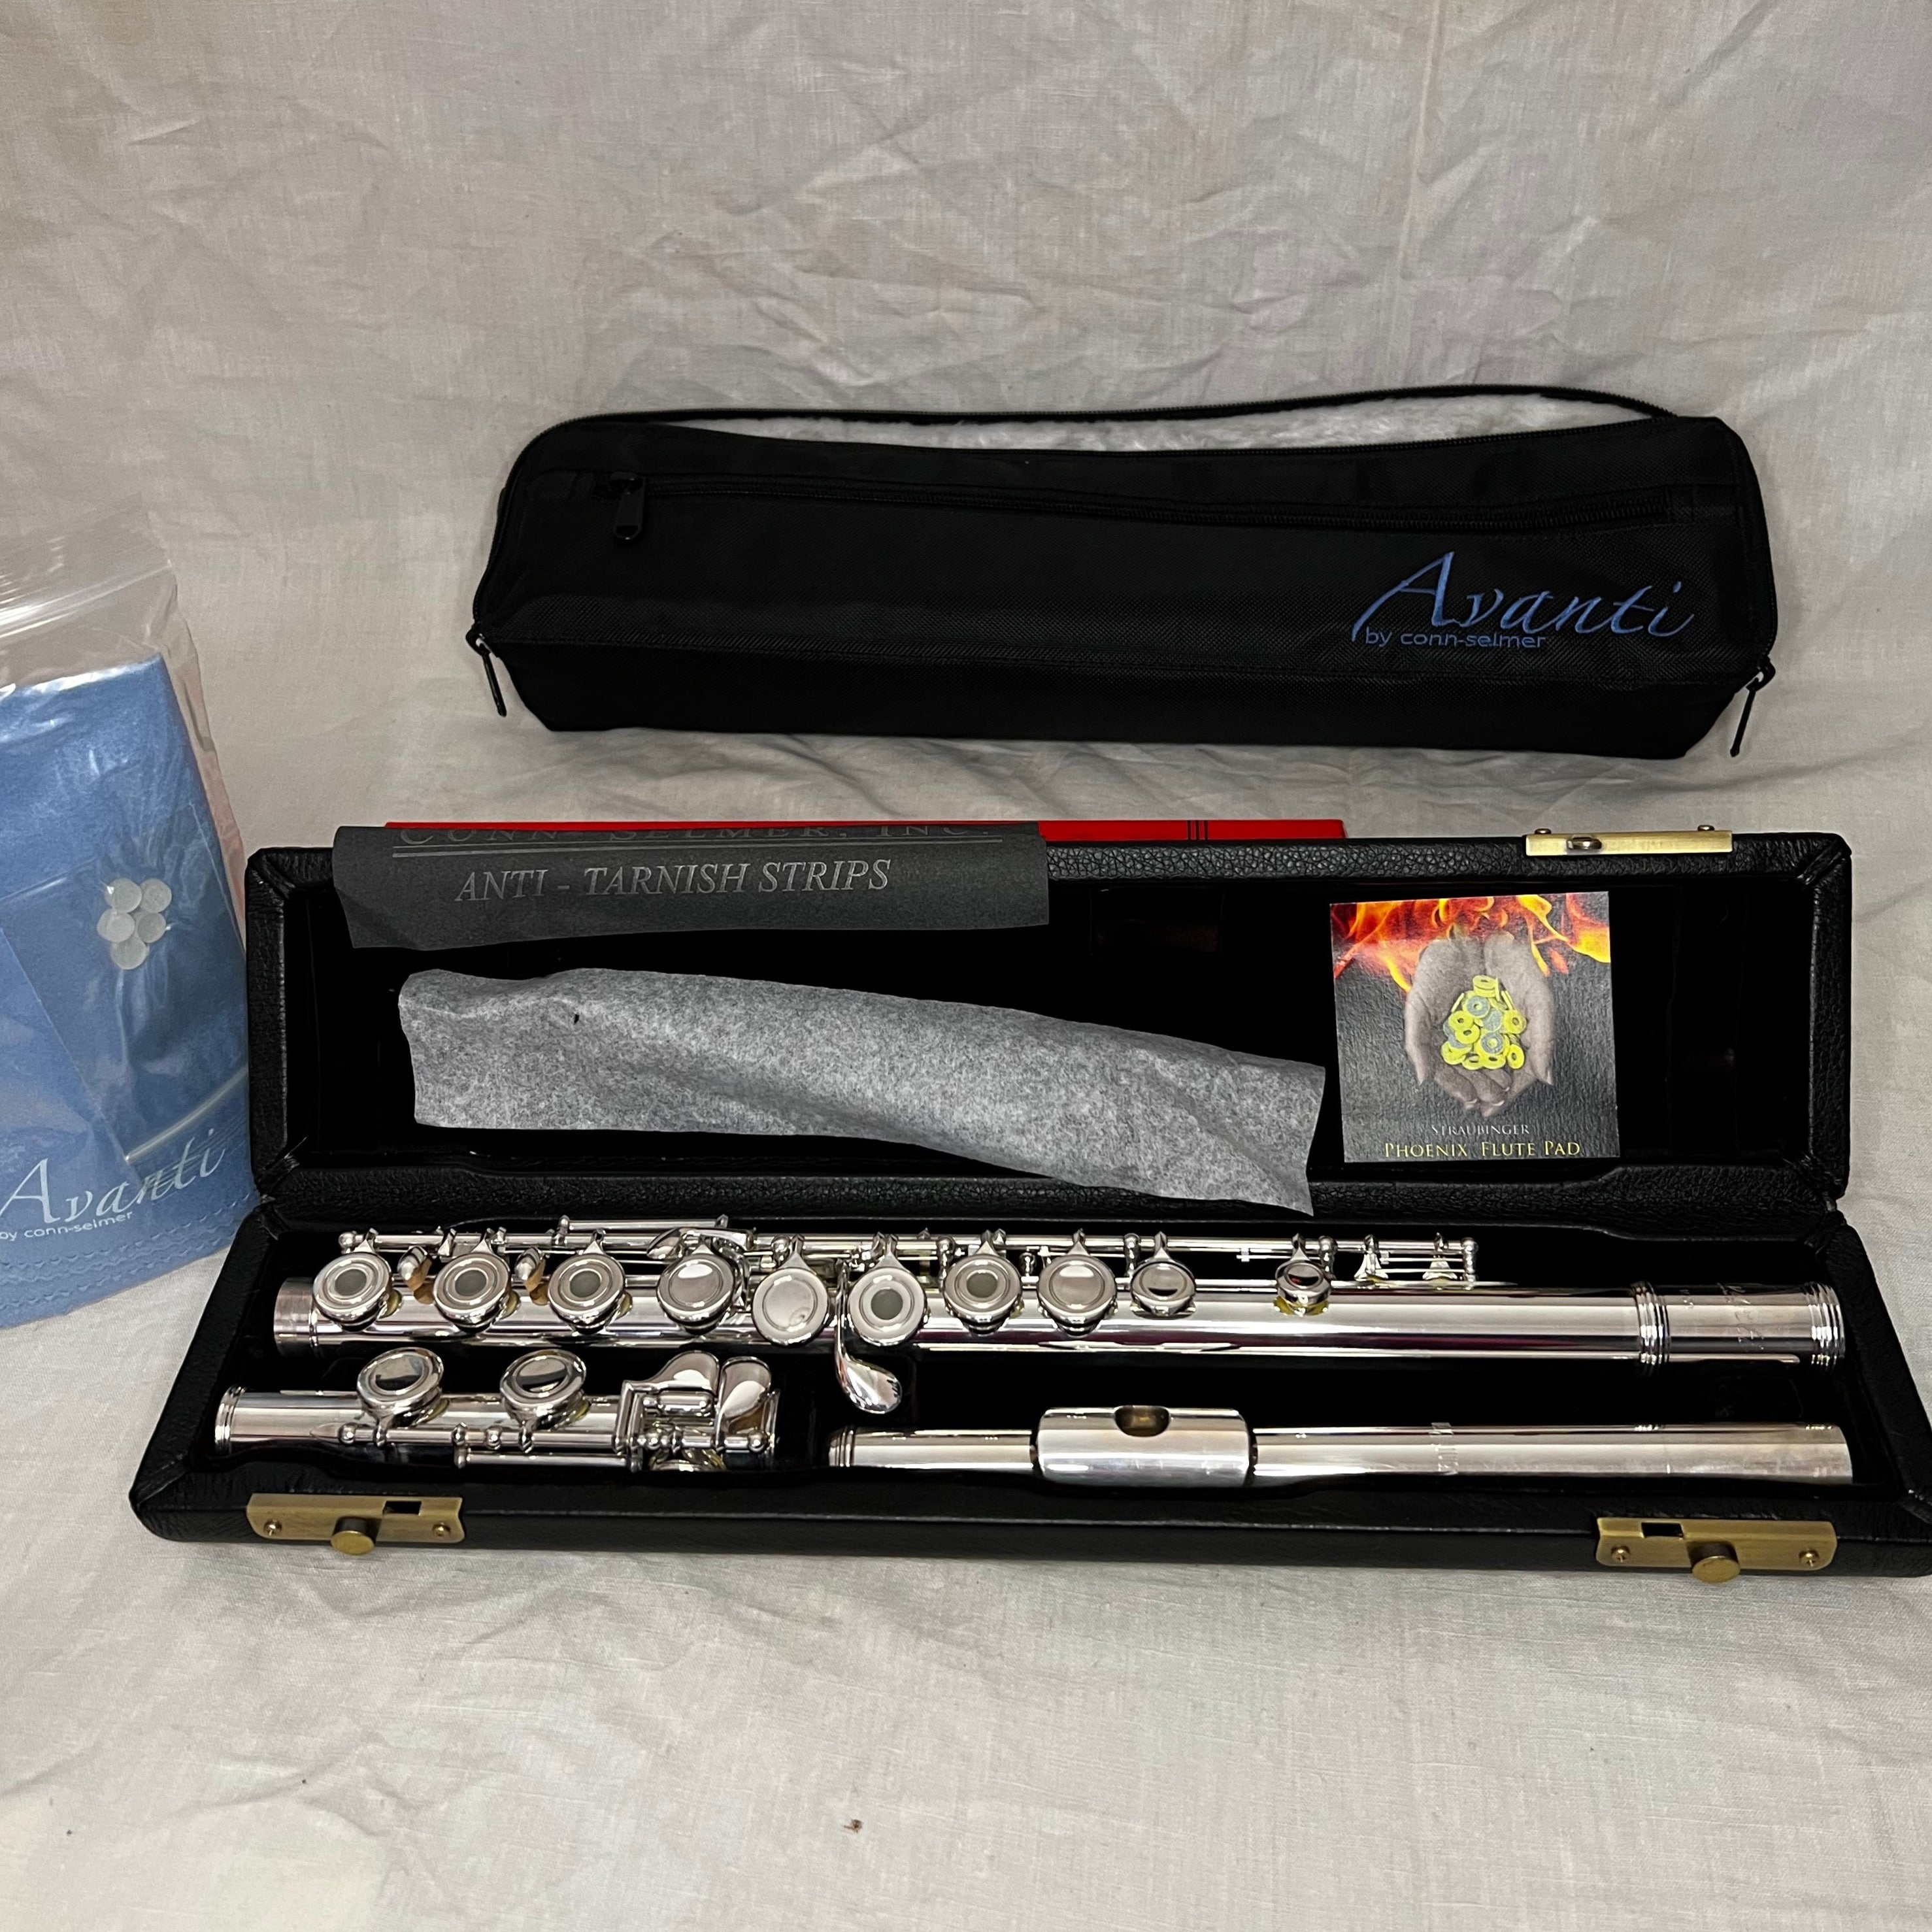 [B-Stock] Avanti Sterling Silver Head 1000CEF Flute USA #07**181